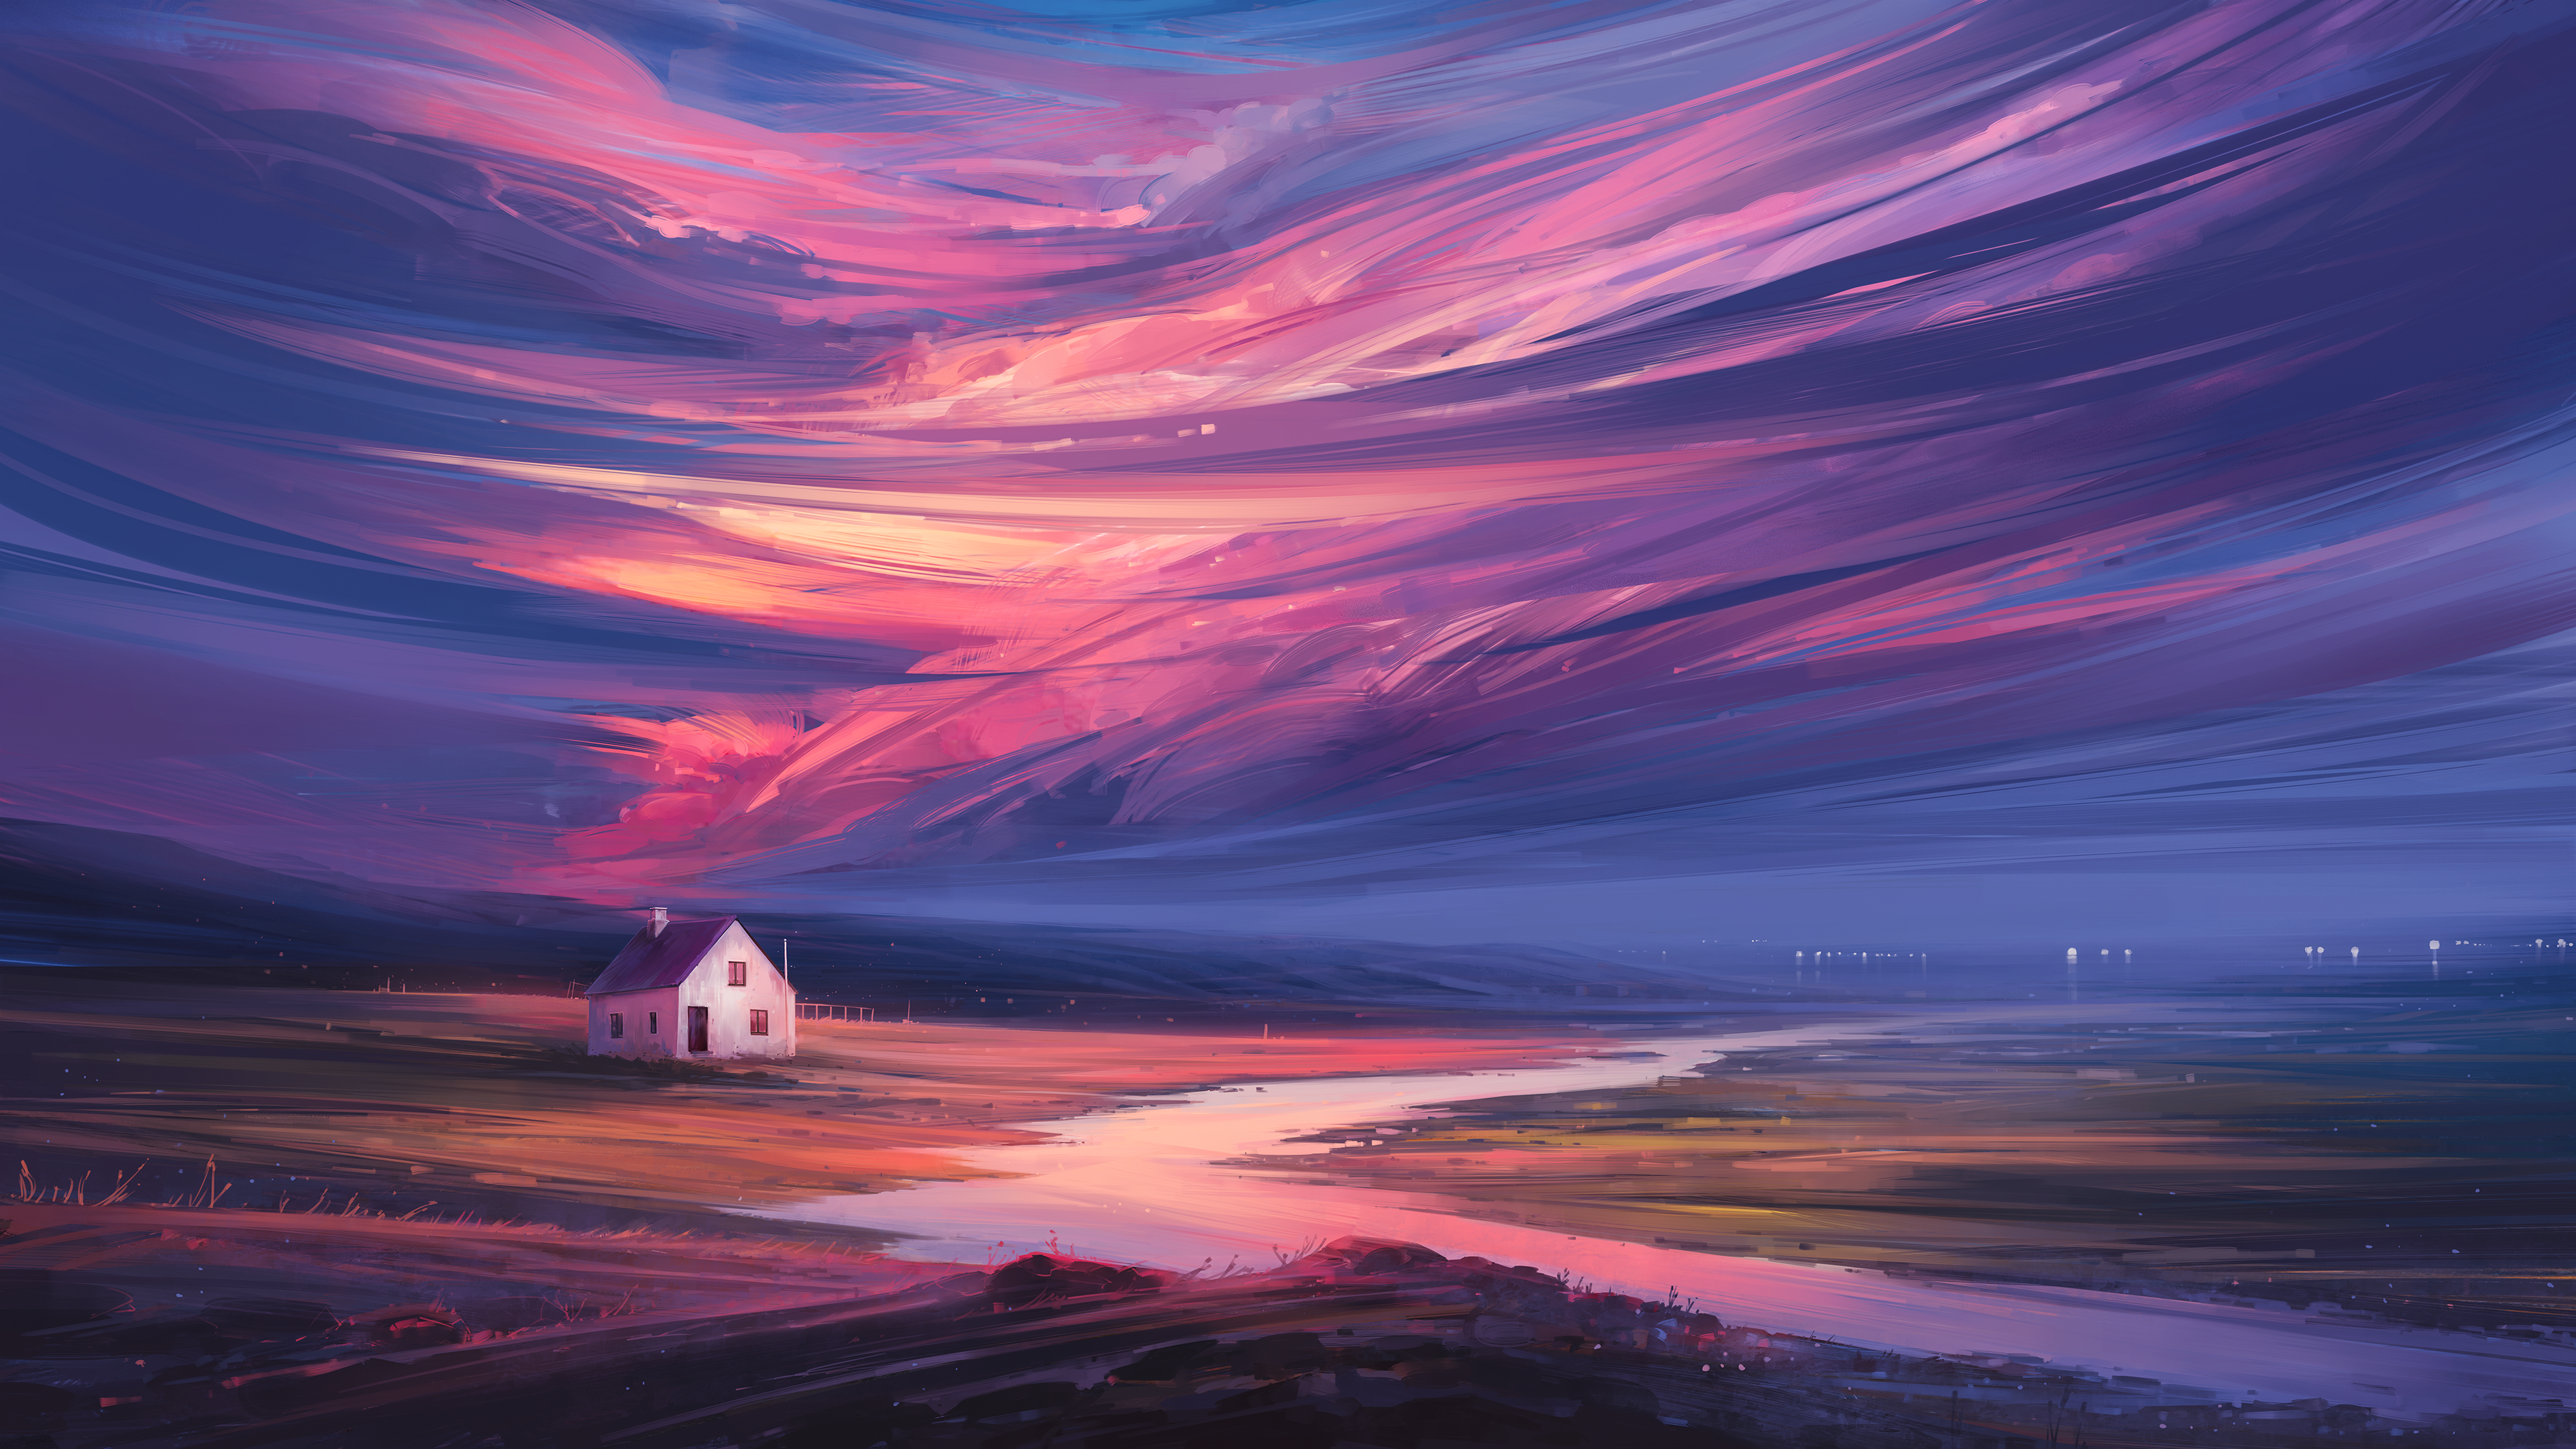 Aenami Digital Art Artwork Illustration 4K Landscape Nature Painting Clouds House River Sunset Sky 3840x2160